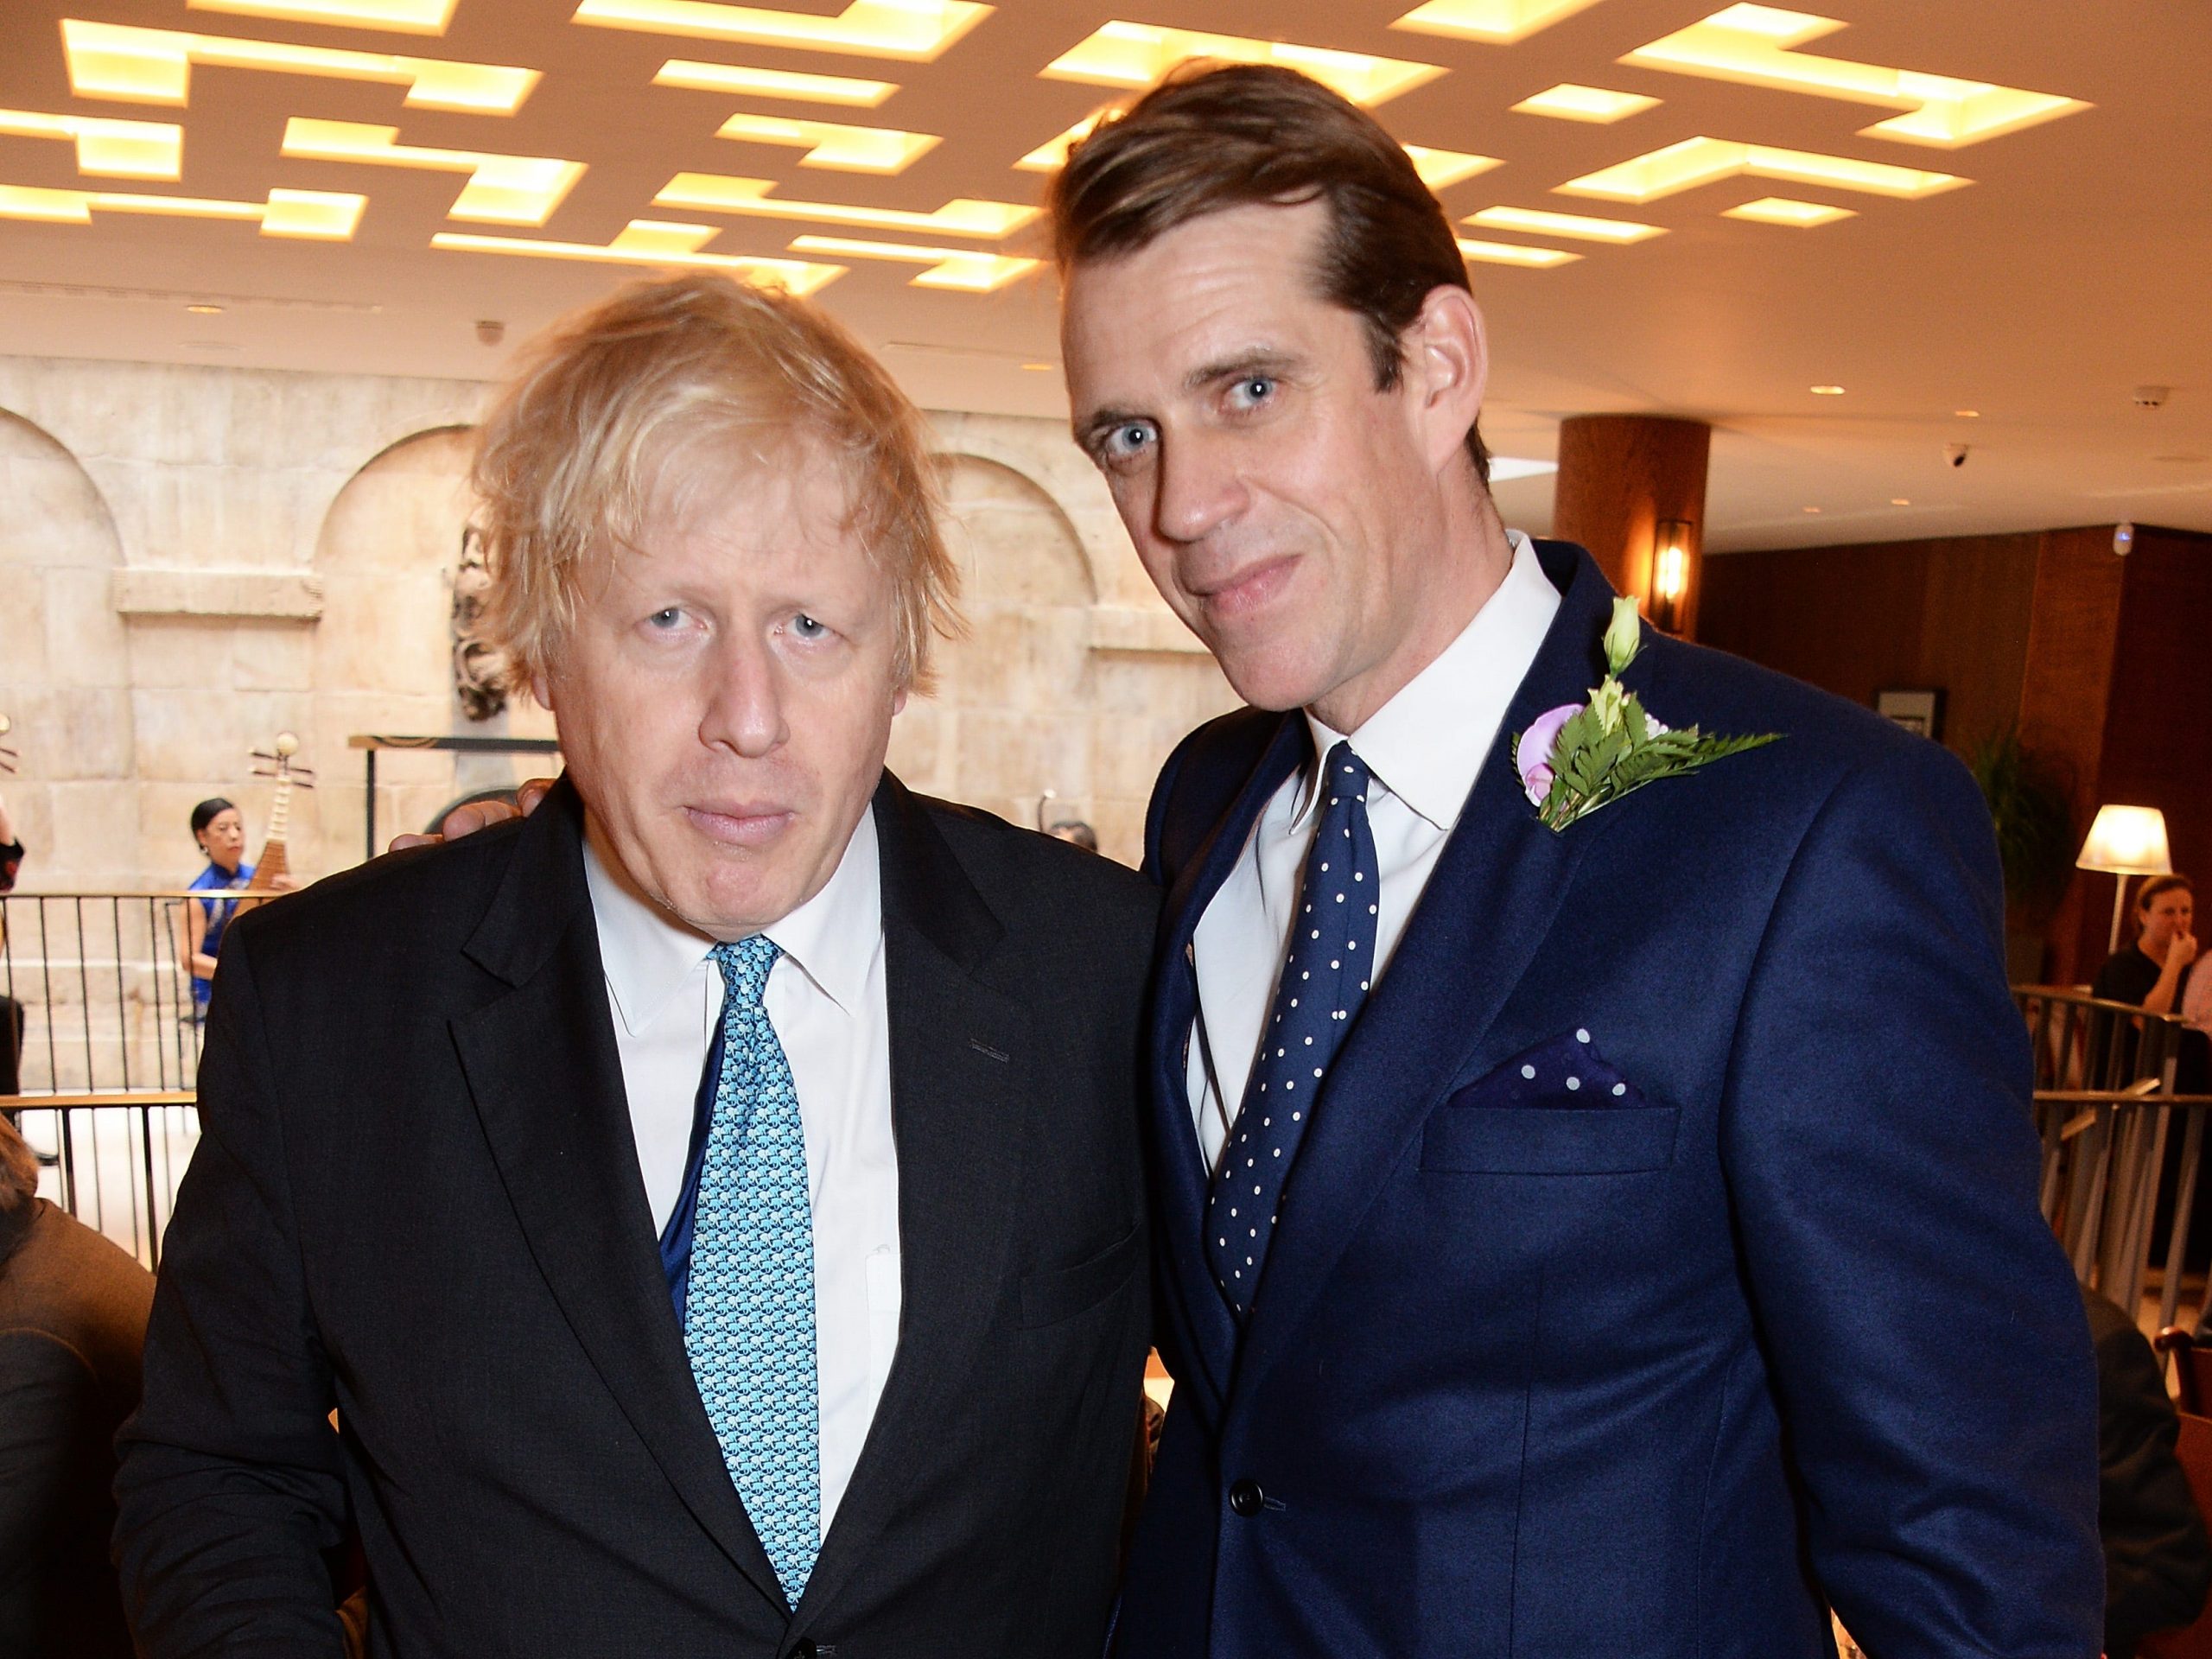 Prime Minister Boris Johnson poses with Ben Elliot, Conservative party co-chairman